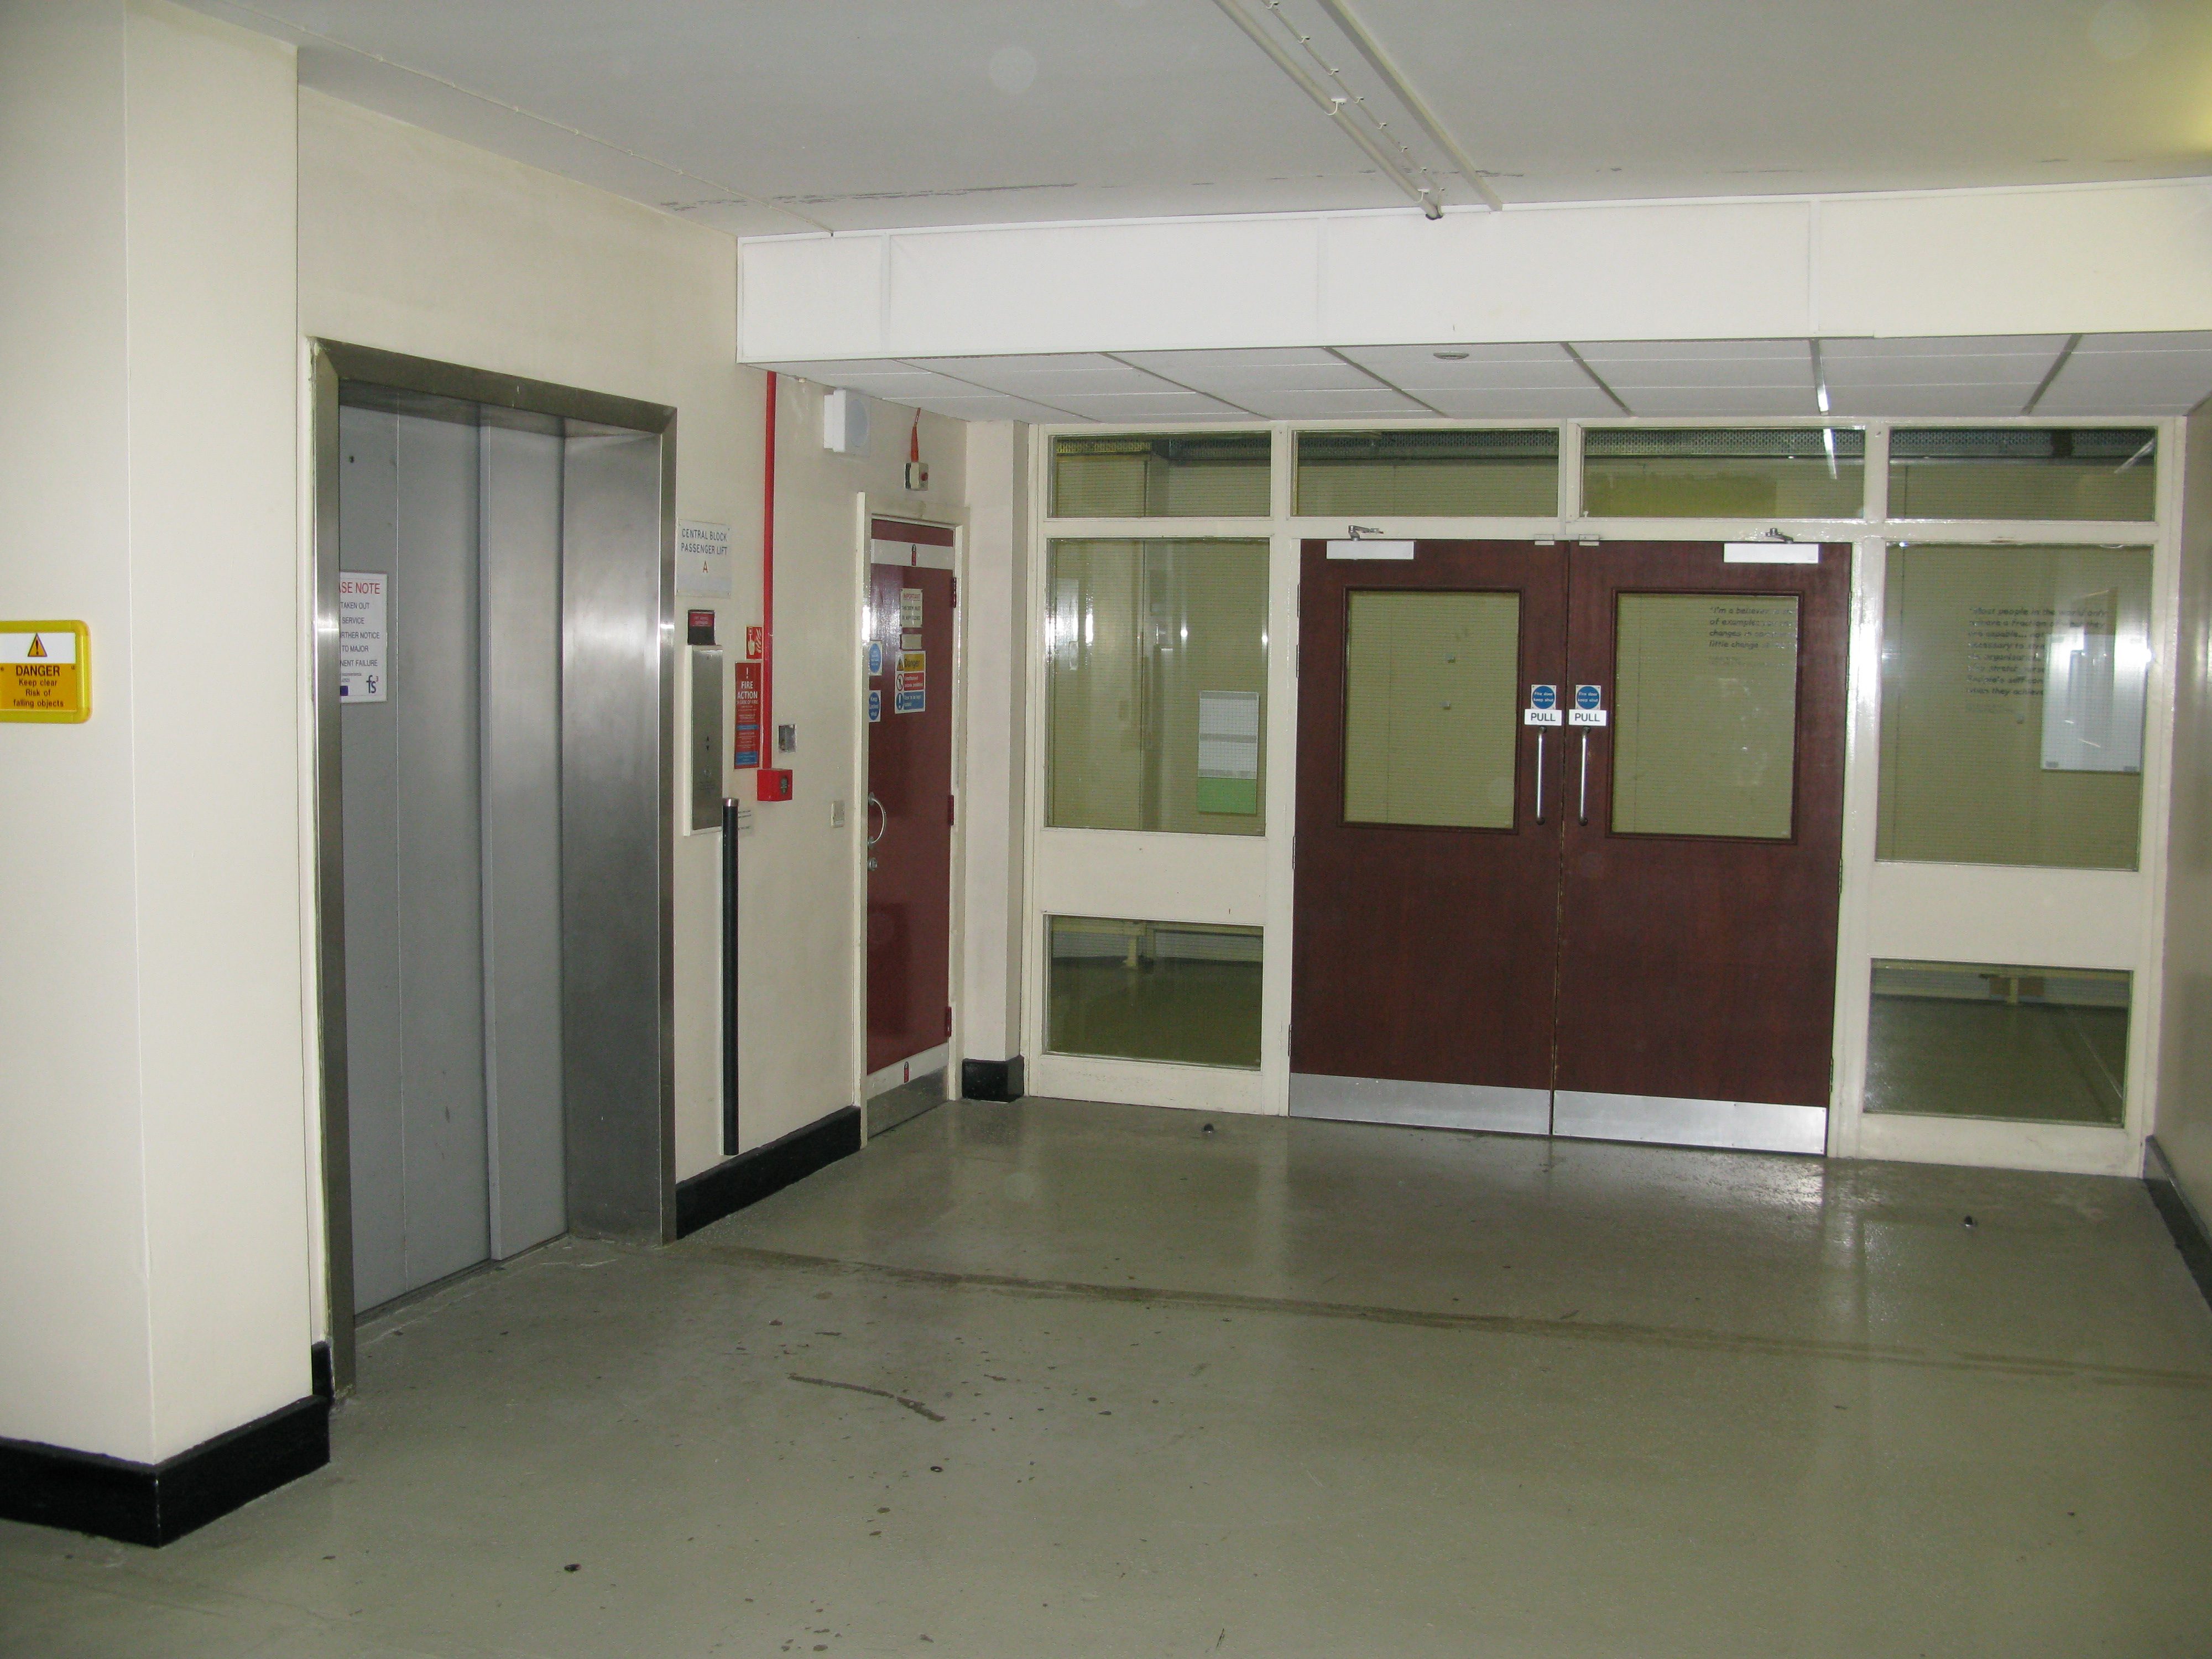 A Core lift lobby, LG floor